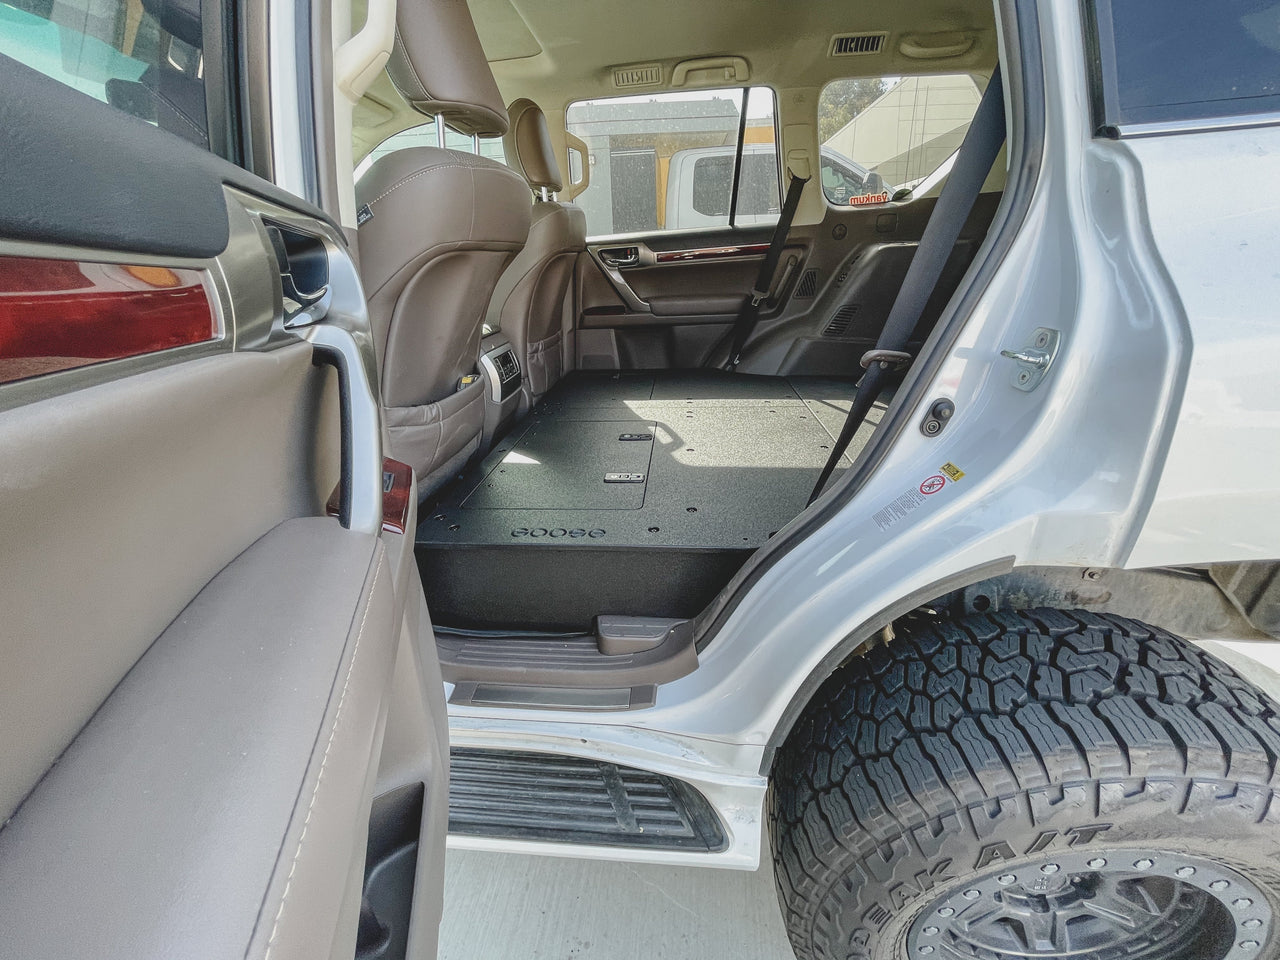 GOOSE GEAR Lexus GX460 2010-Present - Second Row Seat Delete Plate System